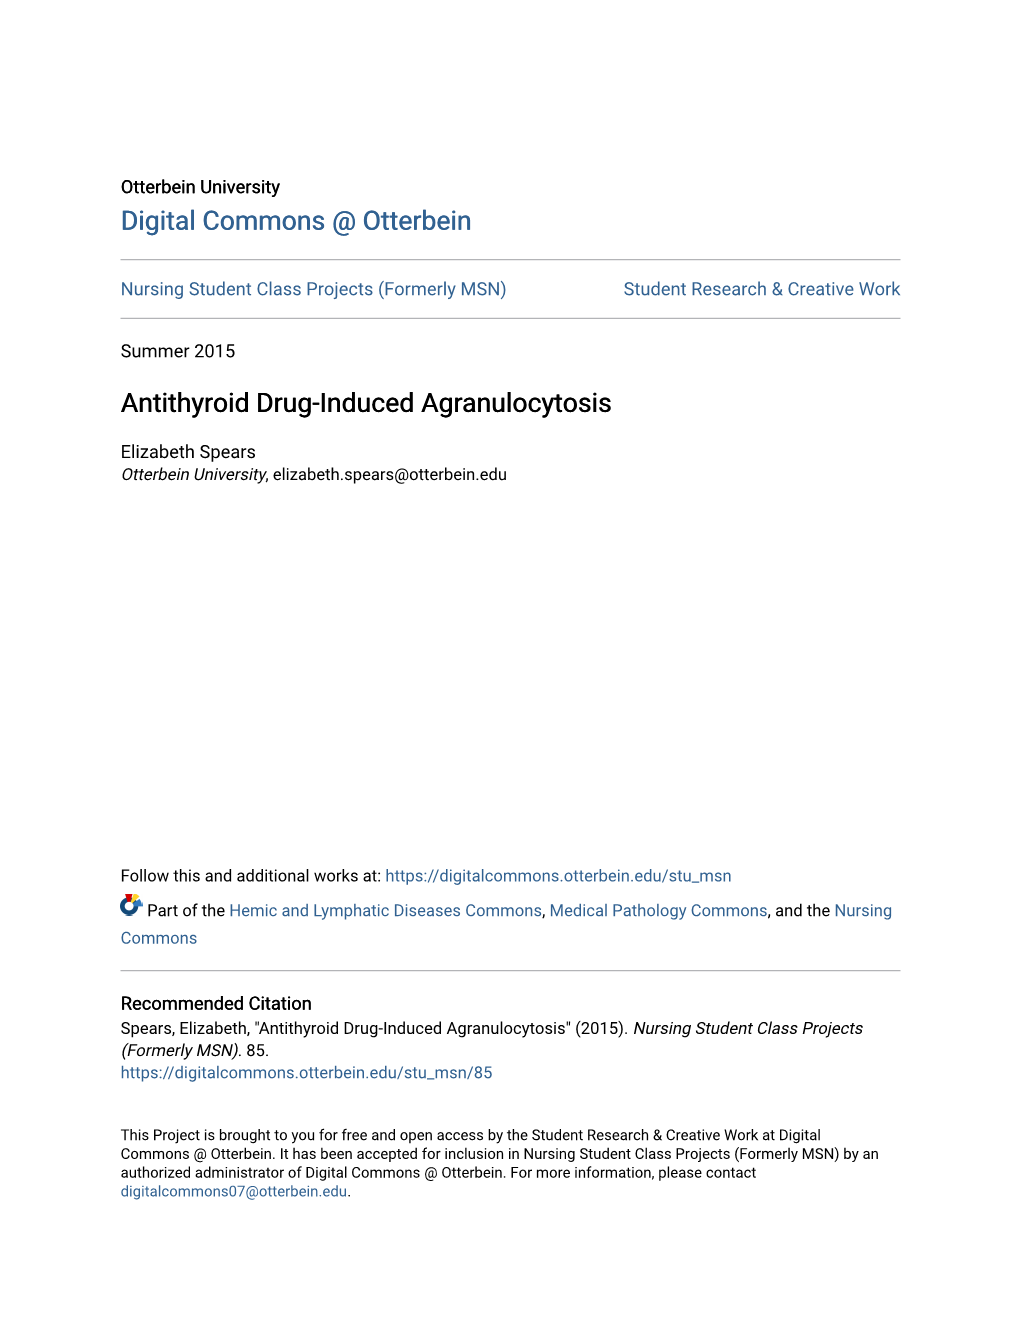 Antithyroid Drug-Induced Agranulocytosis